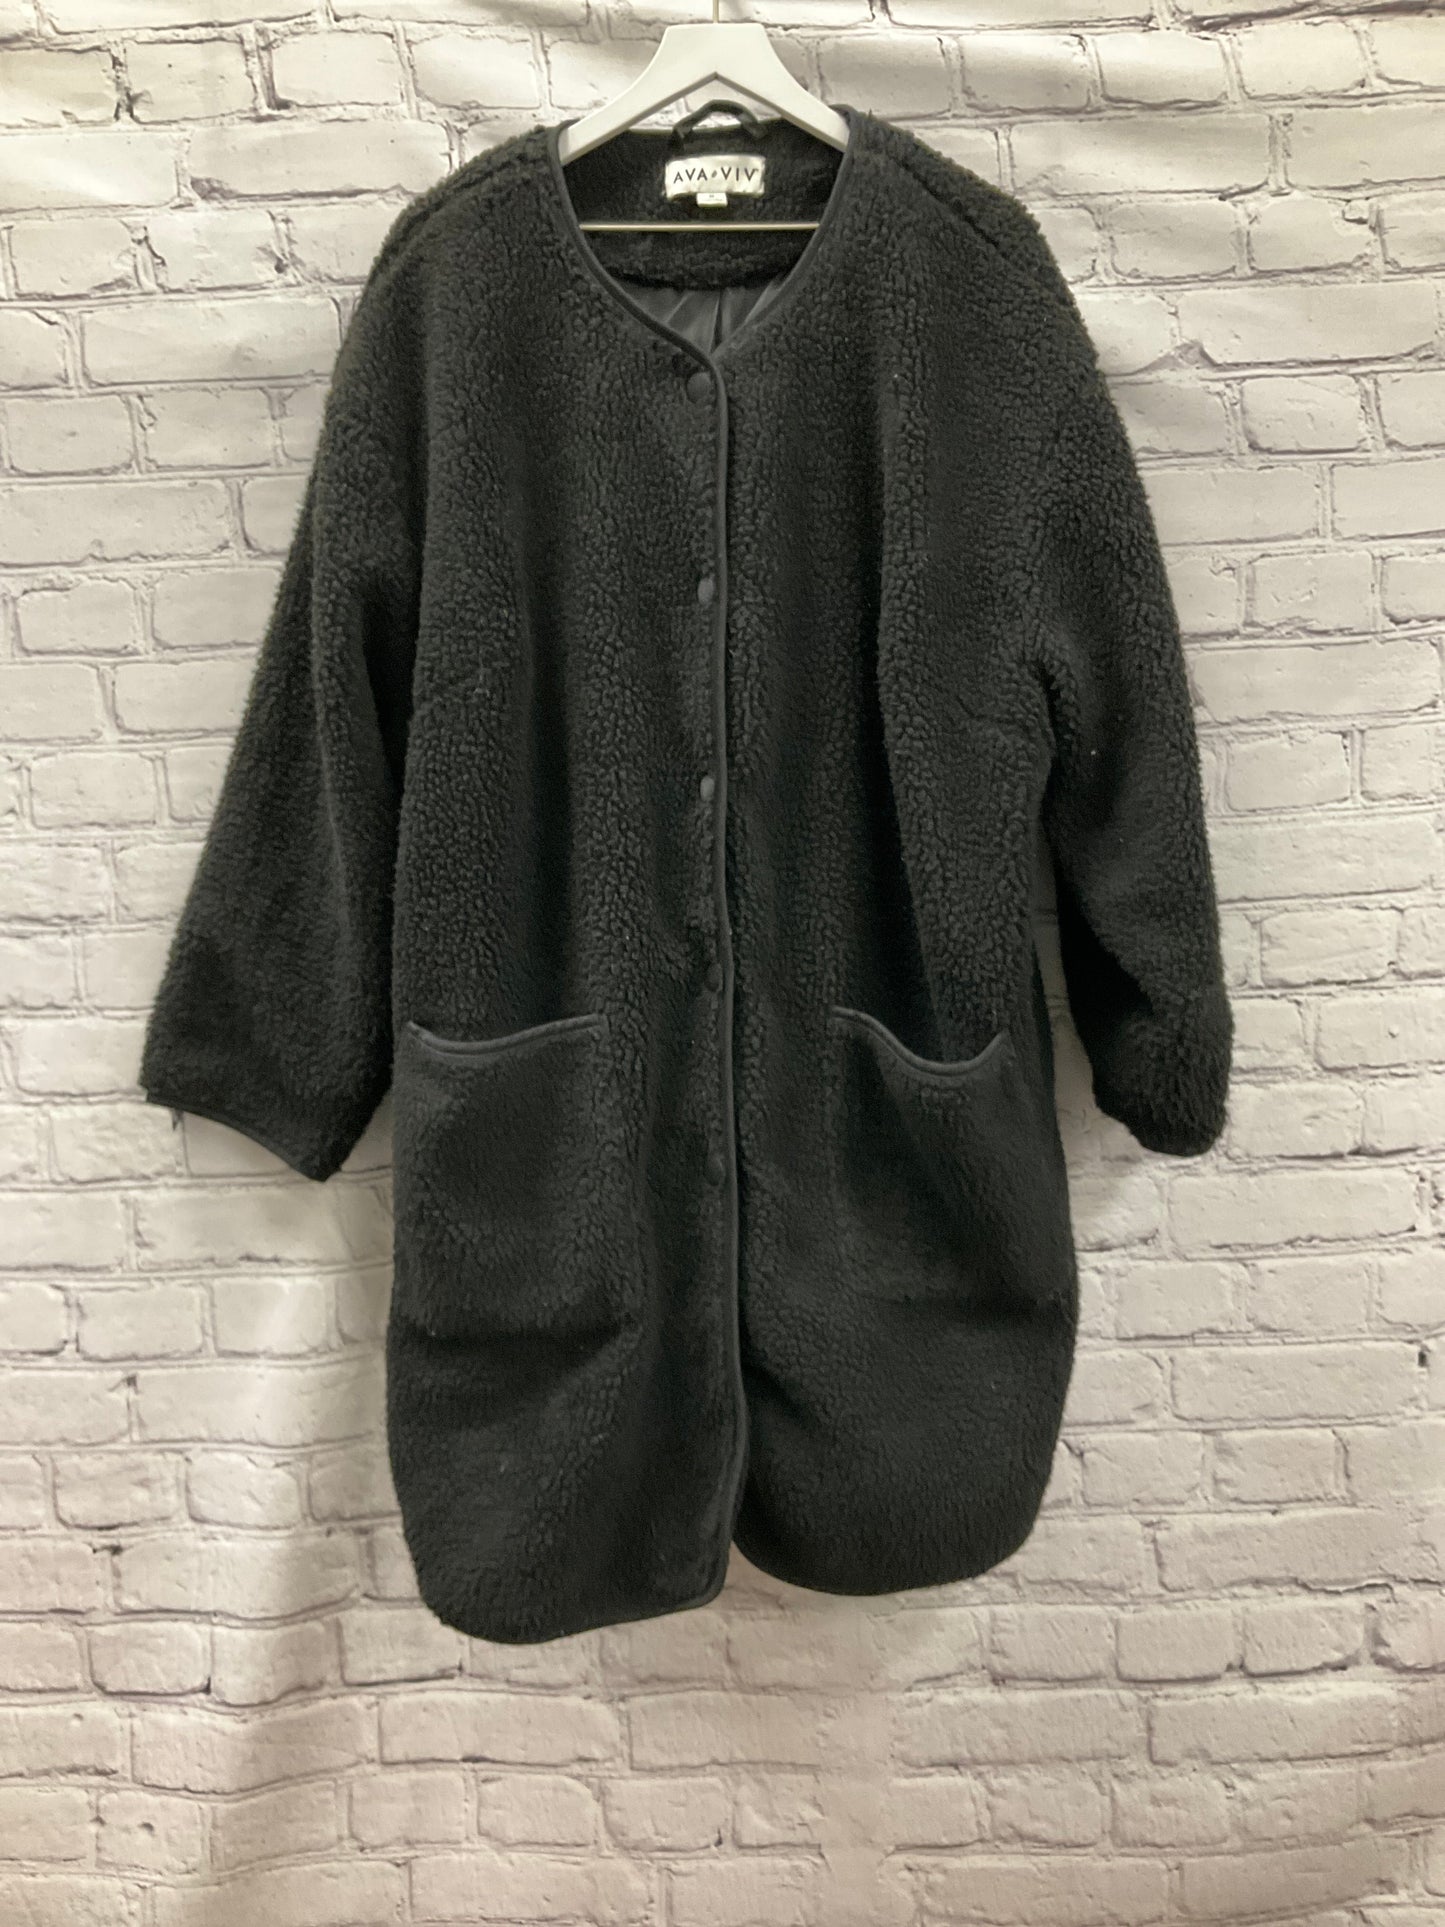 Coat Other By Ava & Viv  Size: 2x